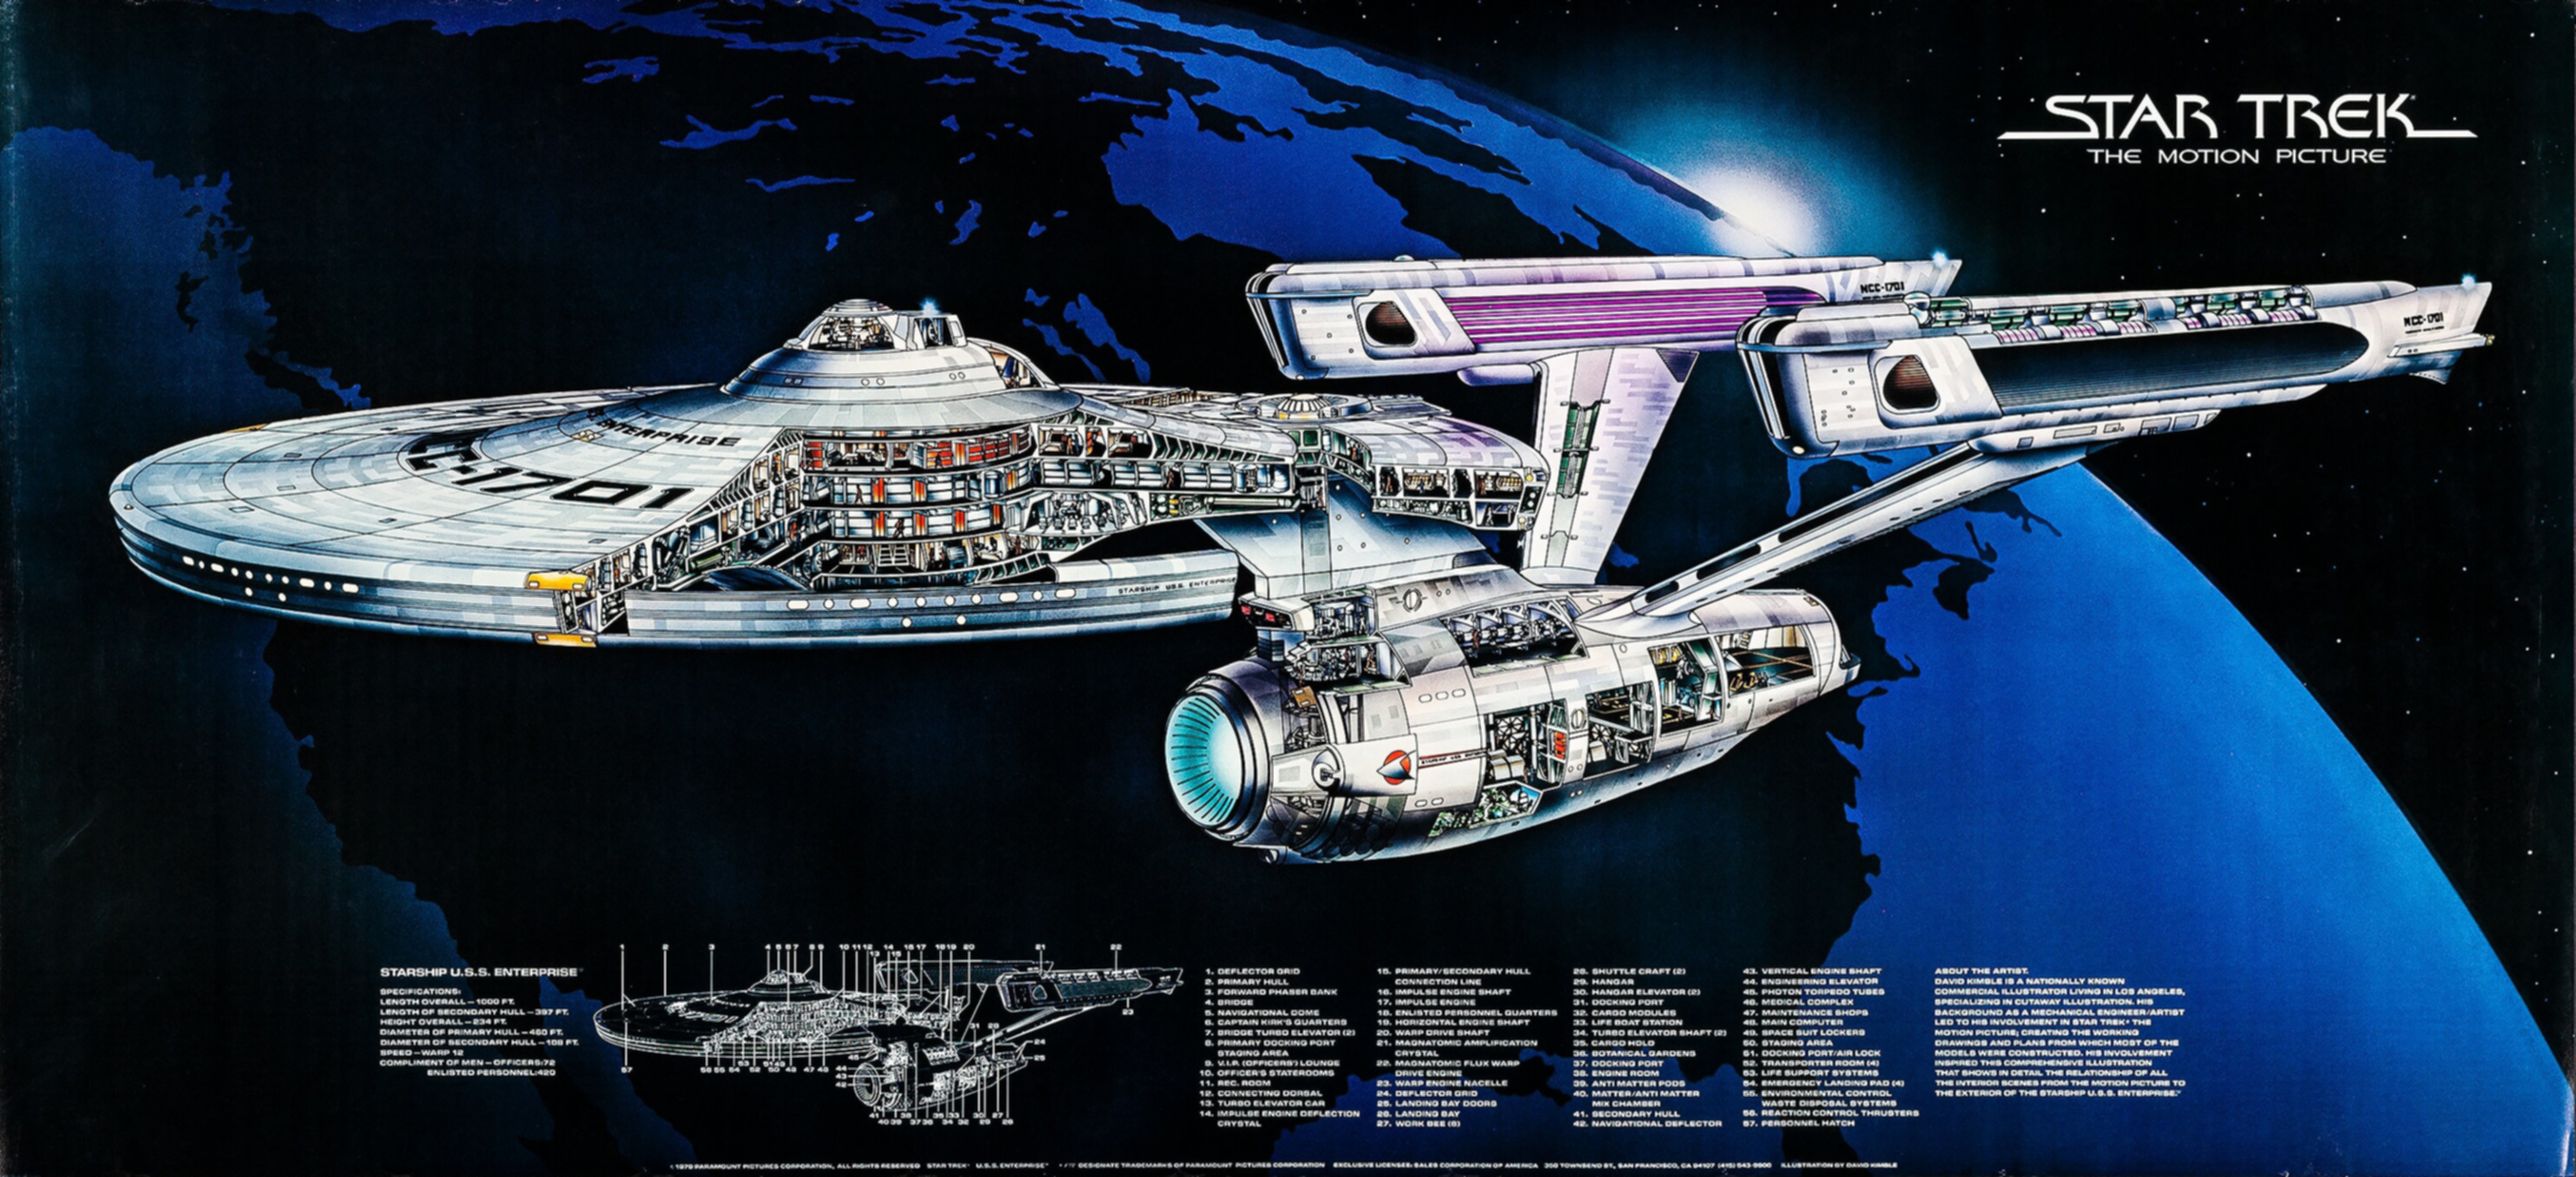 General 2839x1297 Star Trek Deck Plans Star Trek: The Motion Picture Constitution class Star Trek Ships USS Enterprise NCC-1701 movies science fiction spaceship vehicle